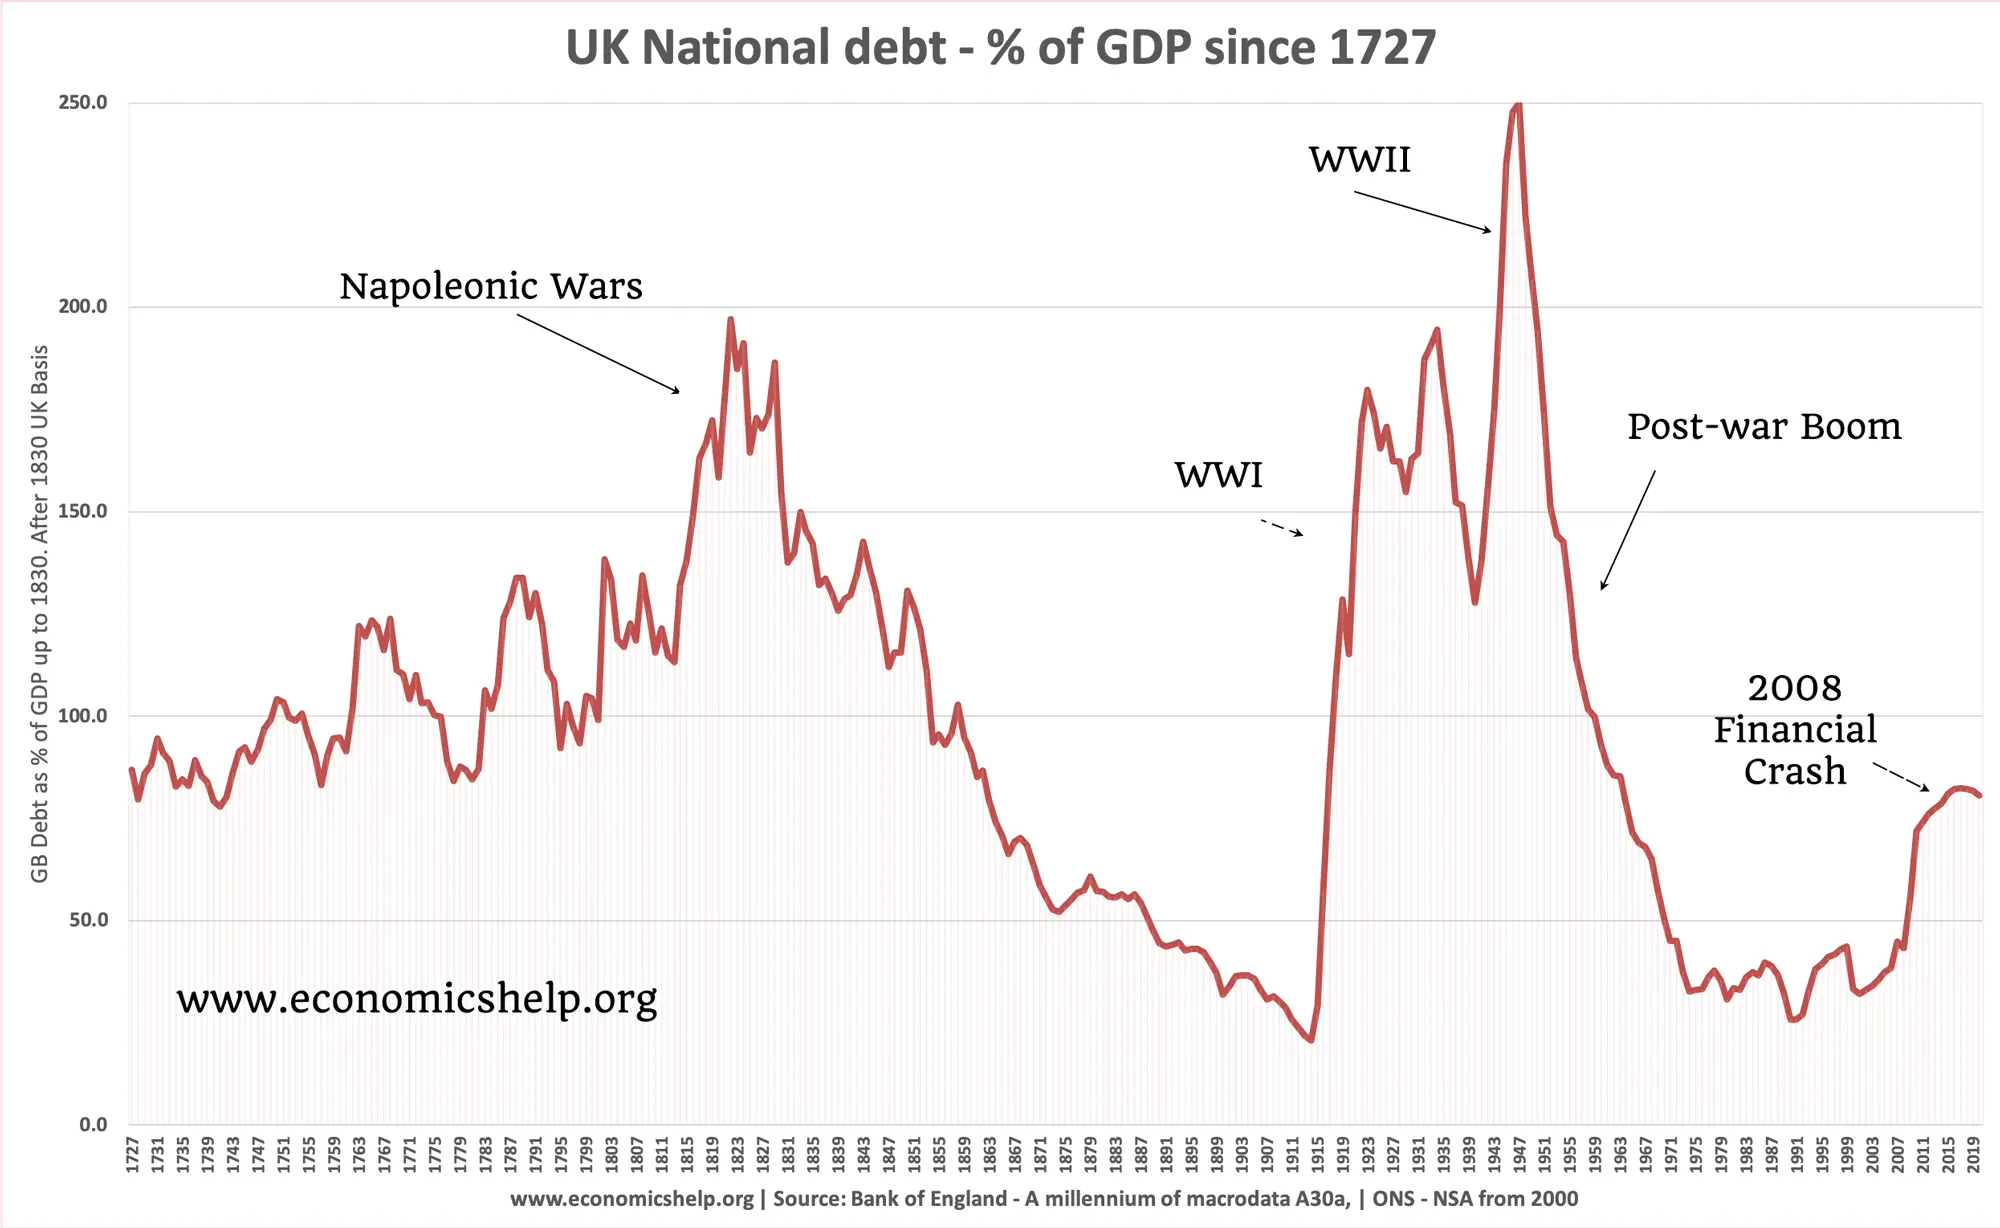 https://www.economicshelp.org/wp-content/uploads/2020/04/uk-national-debt-since-1727-annotated.png.webp